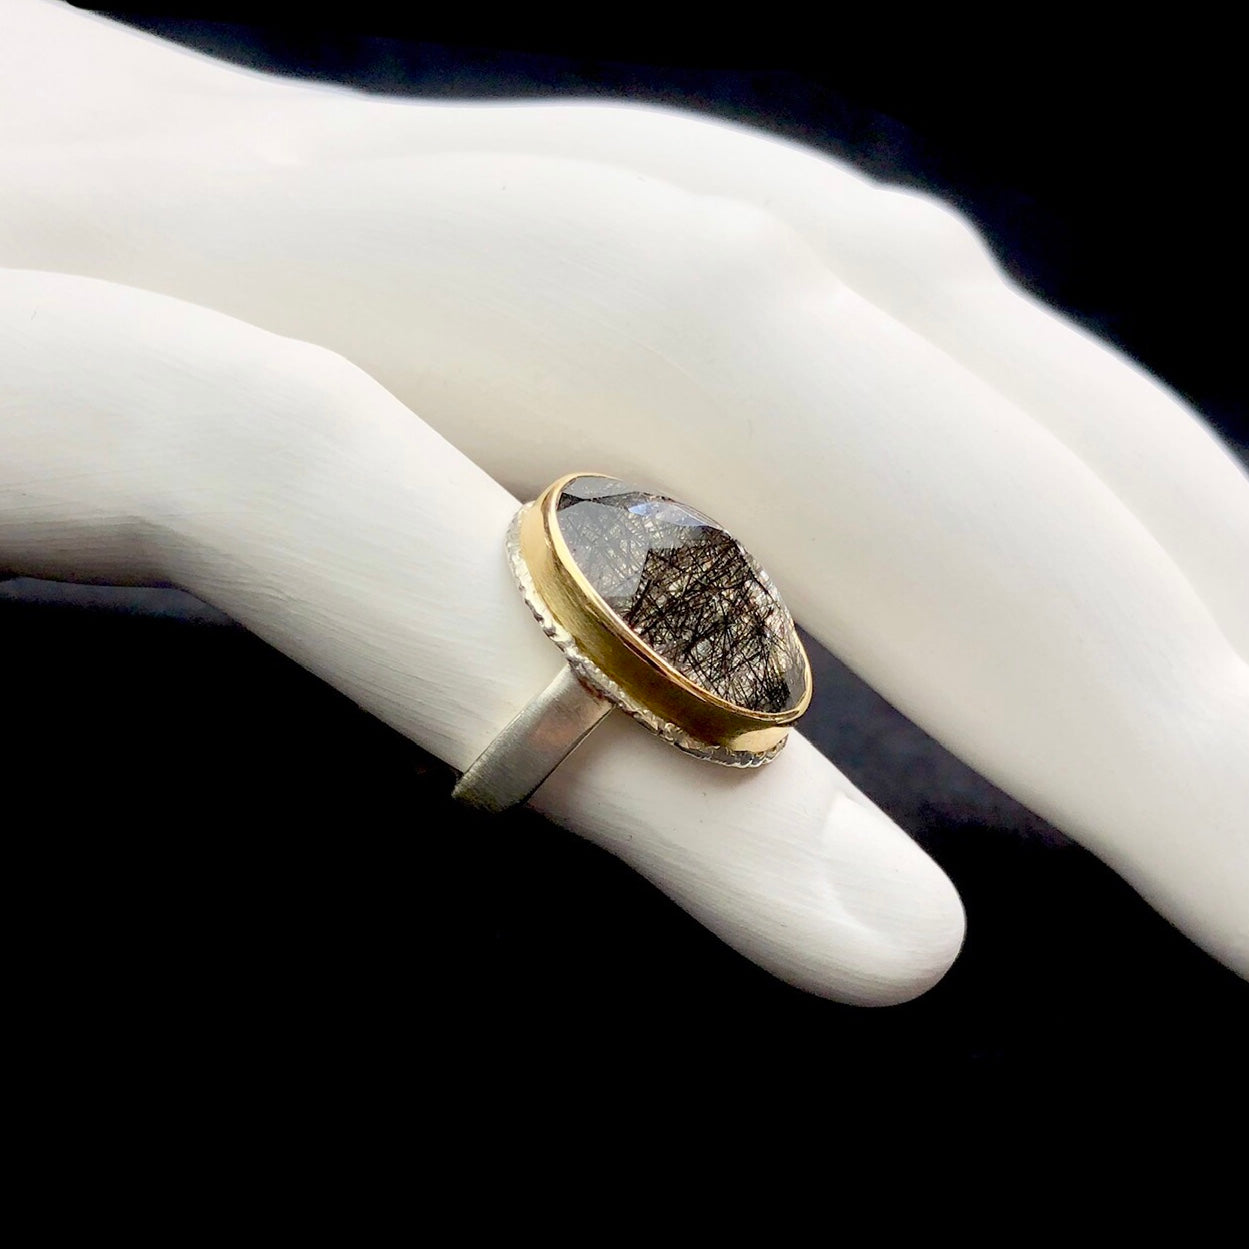 Side profile view of tourmalineted quartz ring on white ceramic finger